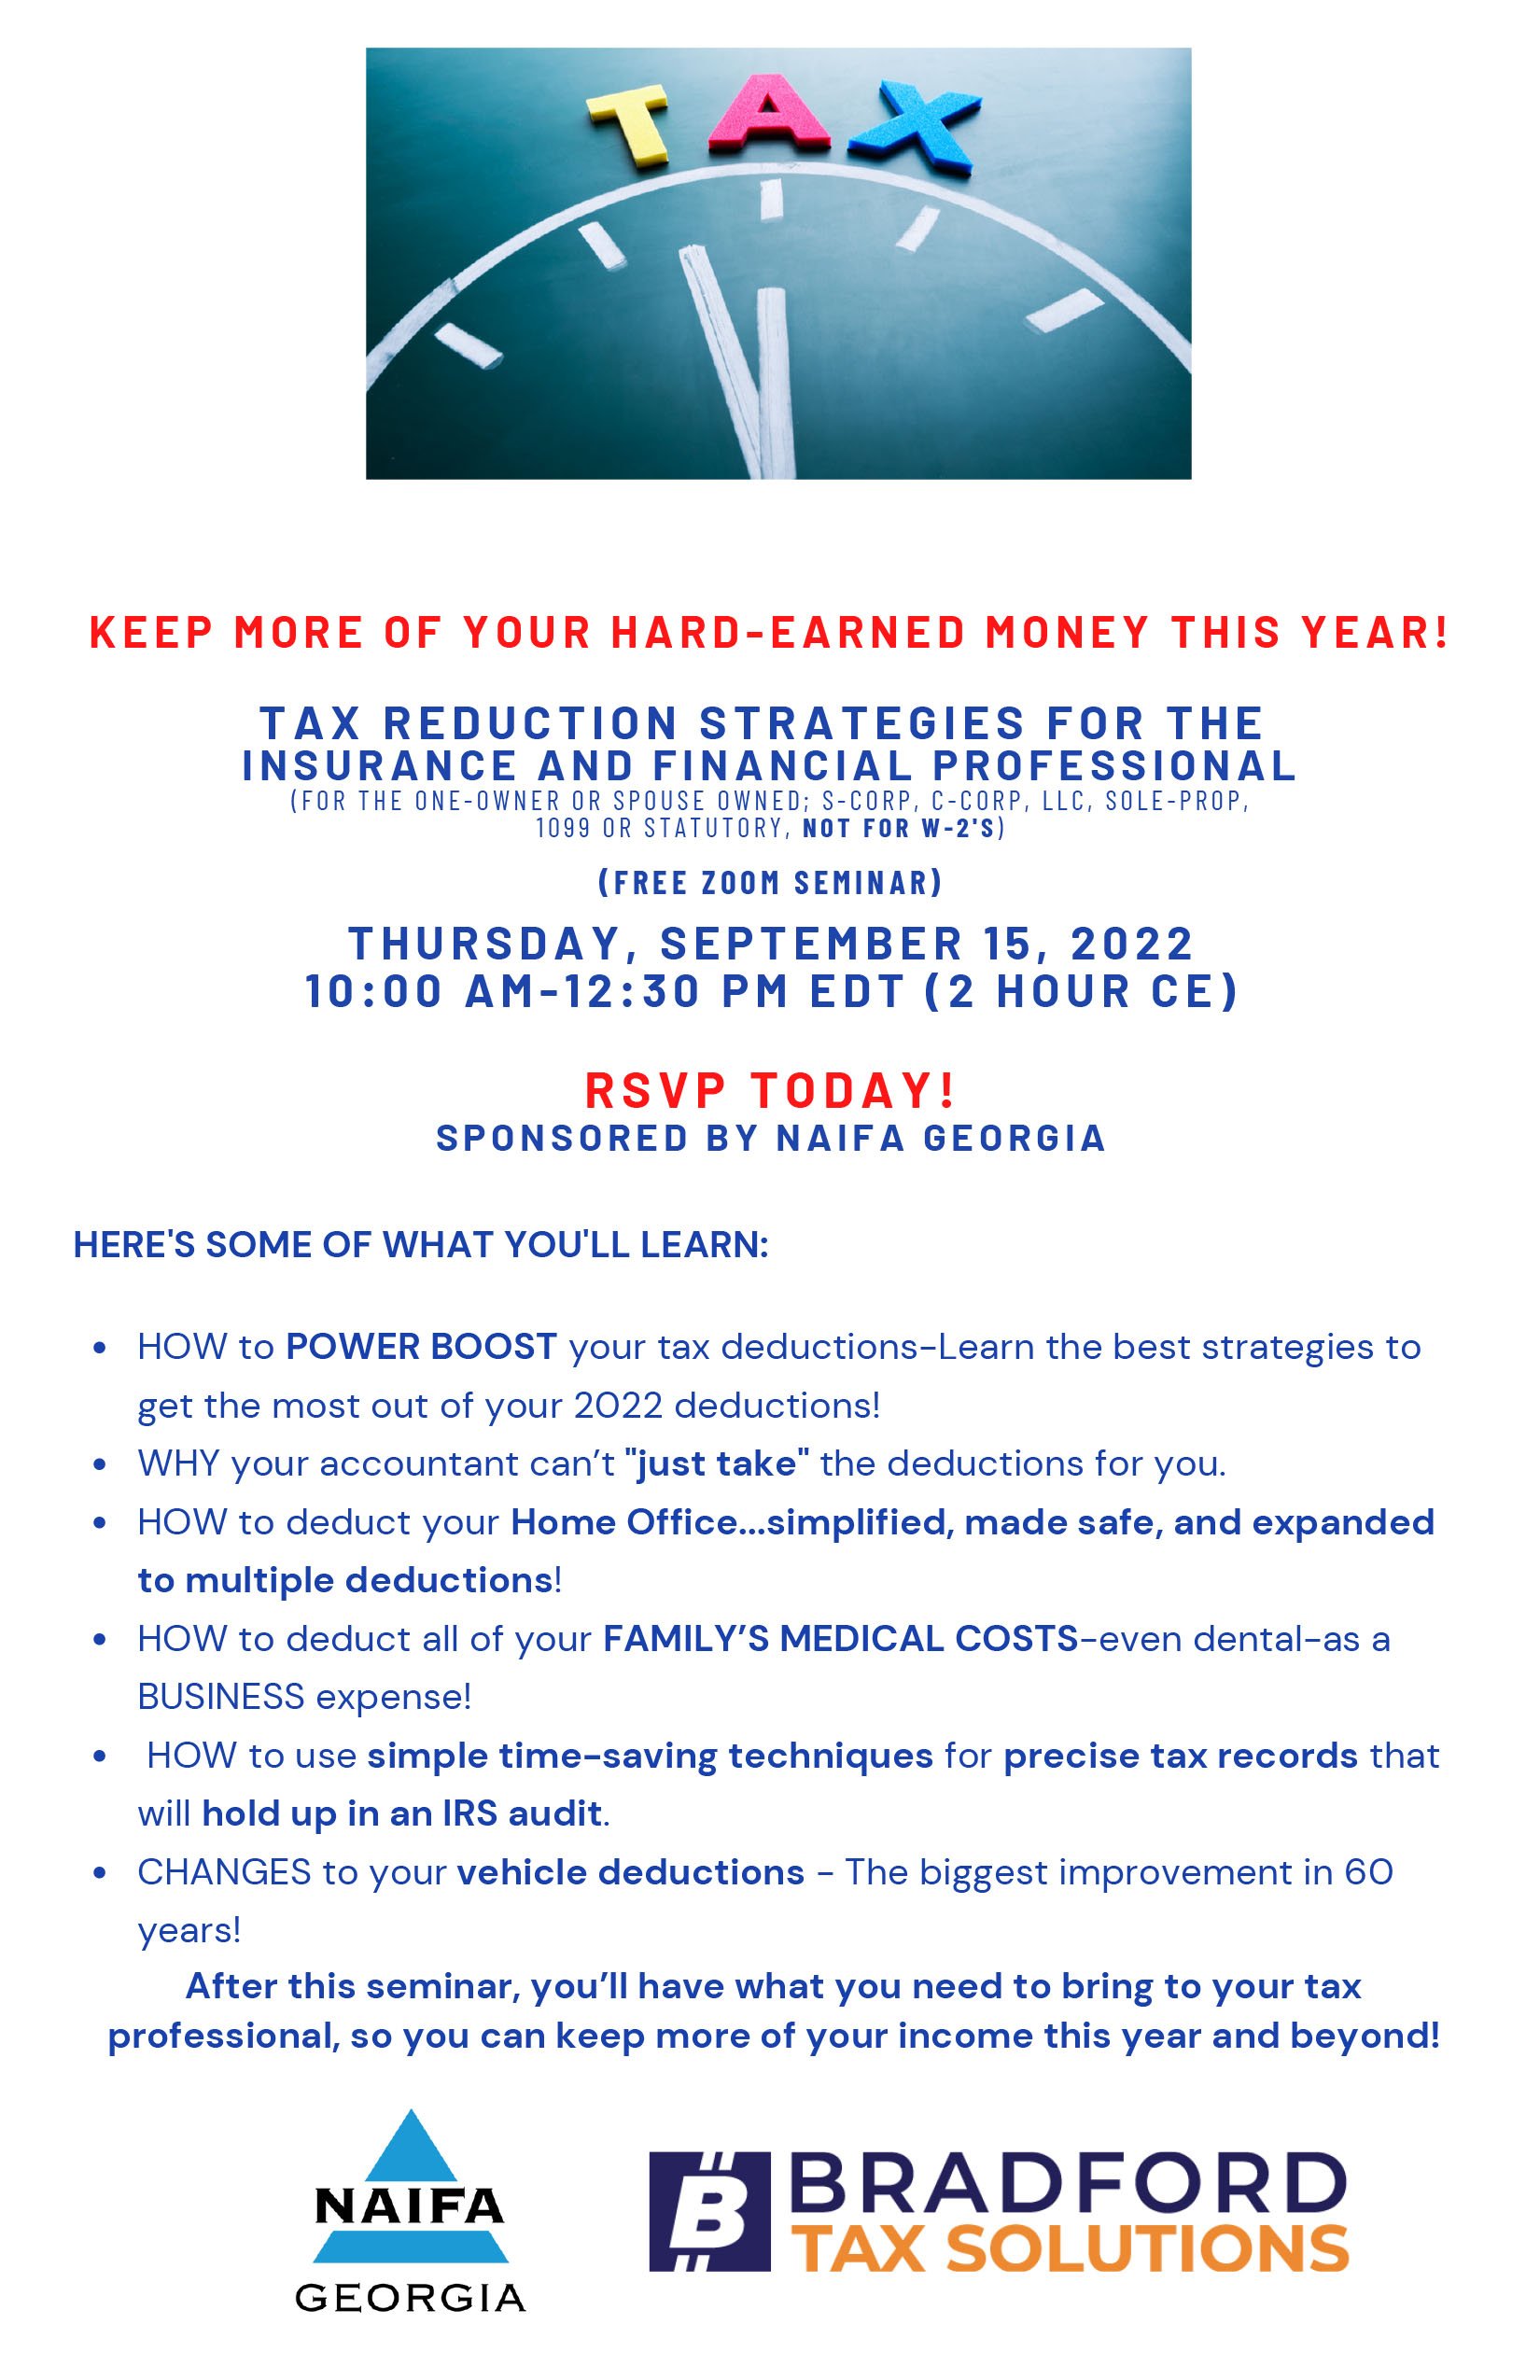 Bradford Tax Seminar NAIFA Georgia Flyer Sept 15 2022-Copy